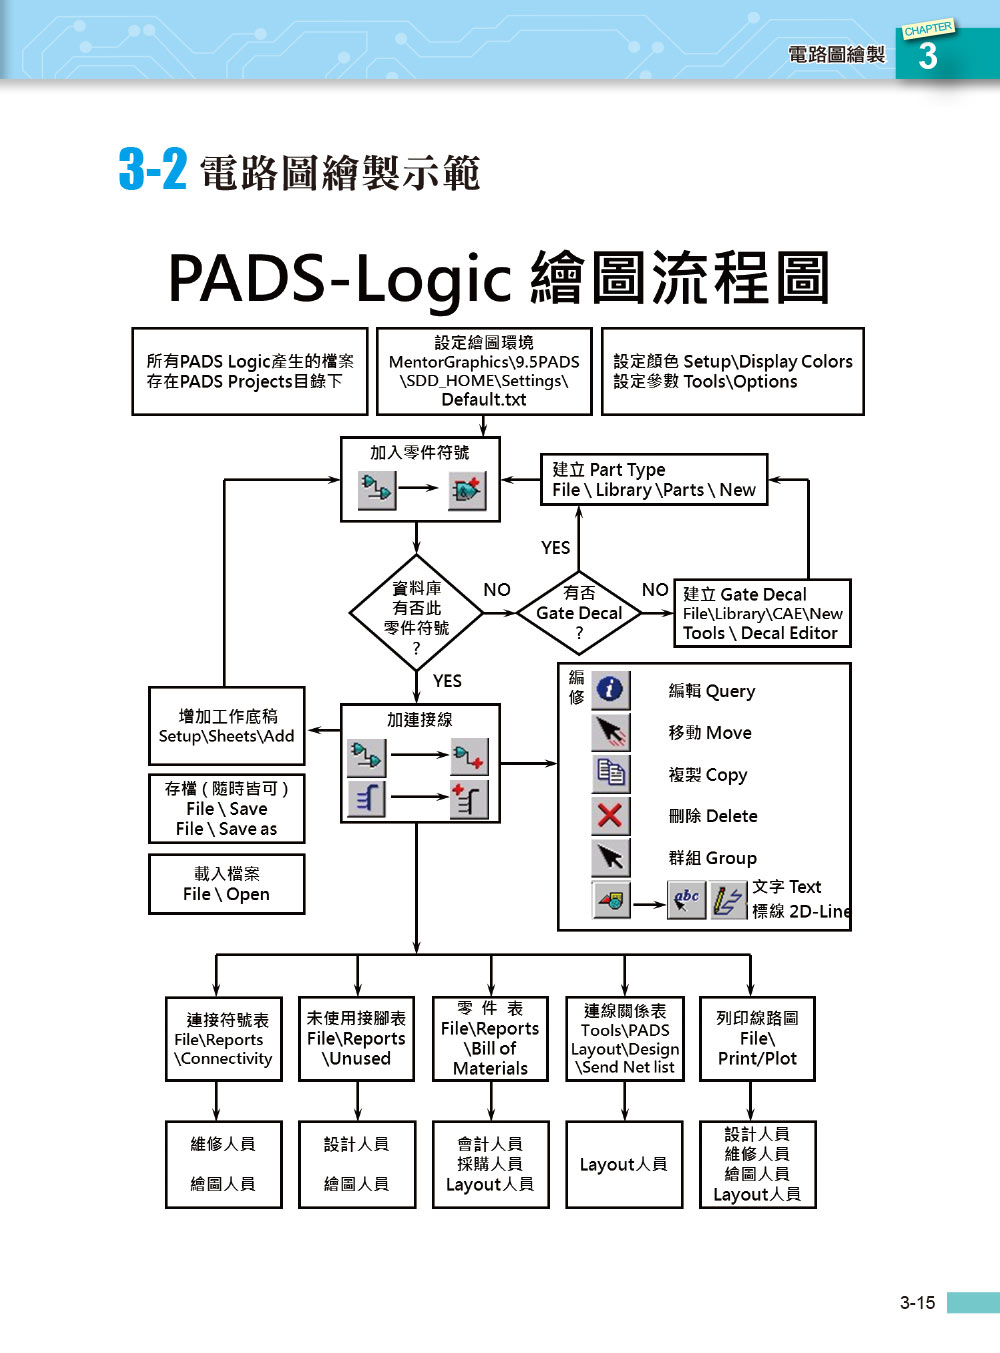 ►GO►最新優惠► 【書籍】PADS Layout電路板設計實作入門